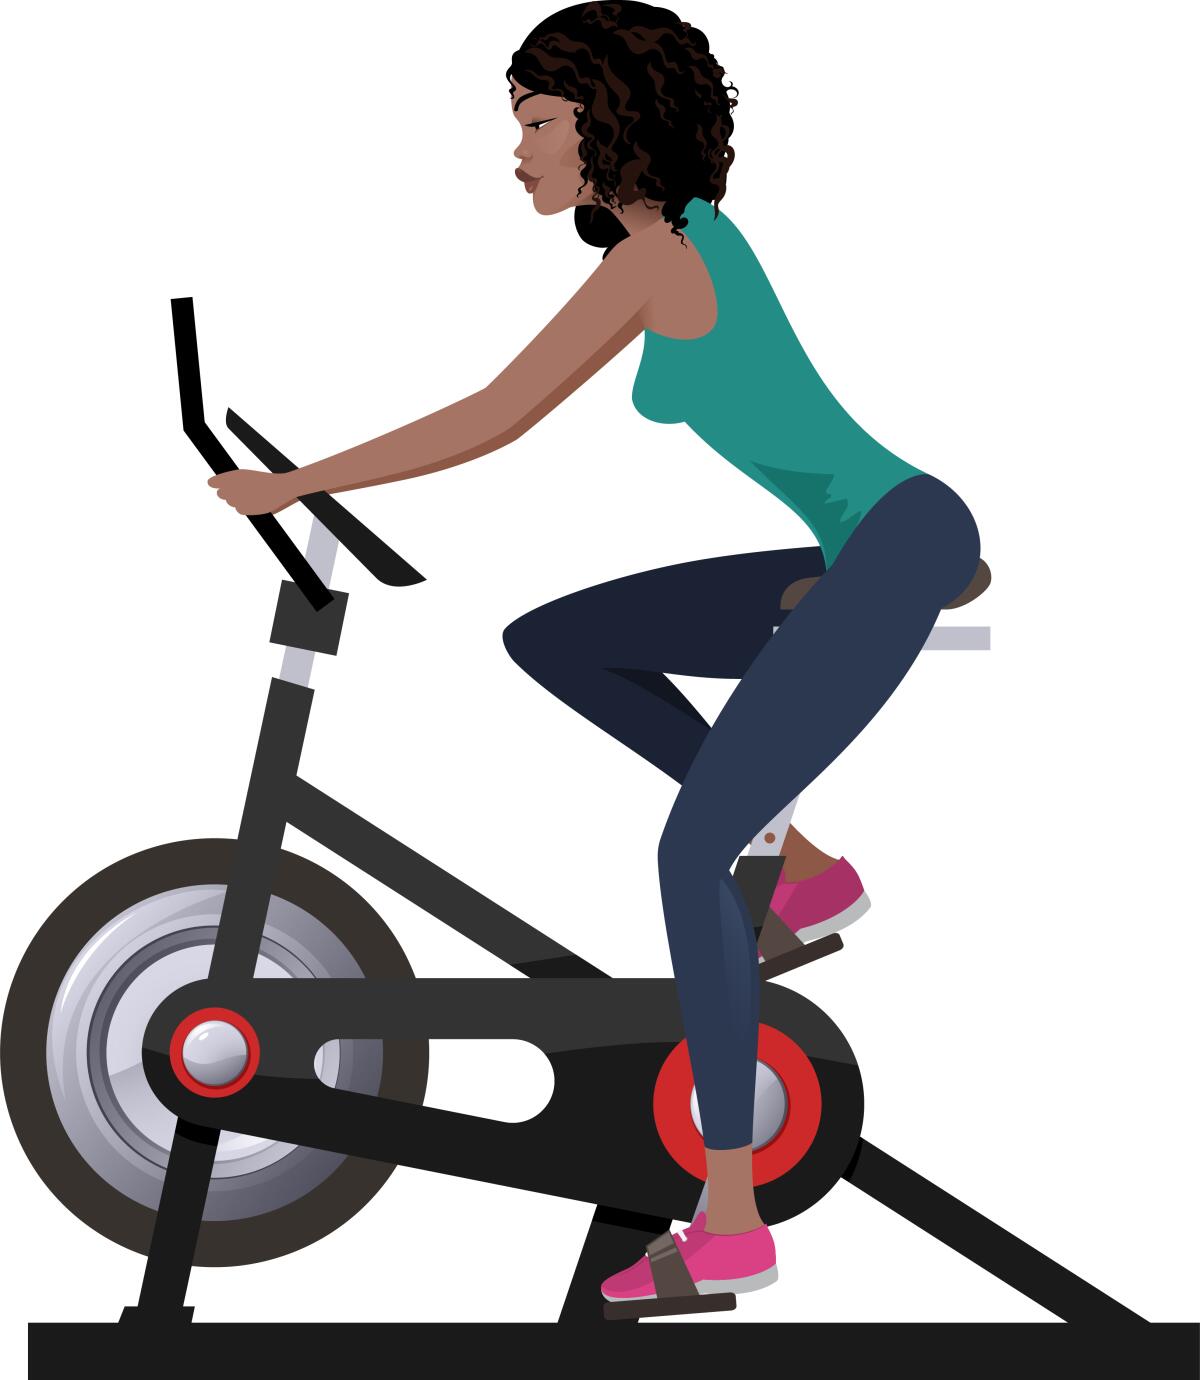 Exercise bike workout